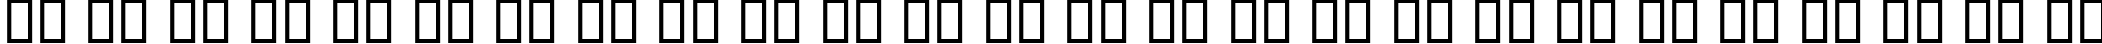 Пример написания английского алфавита шрифтом B Zar Bold